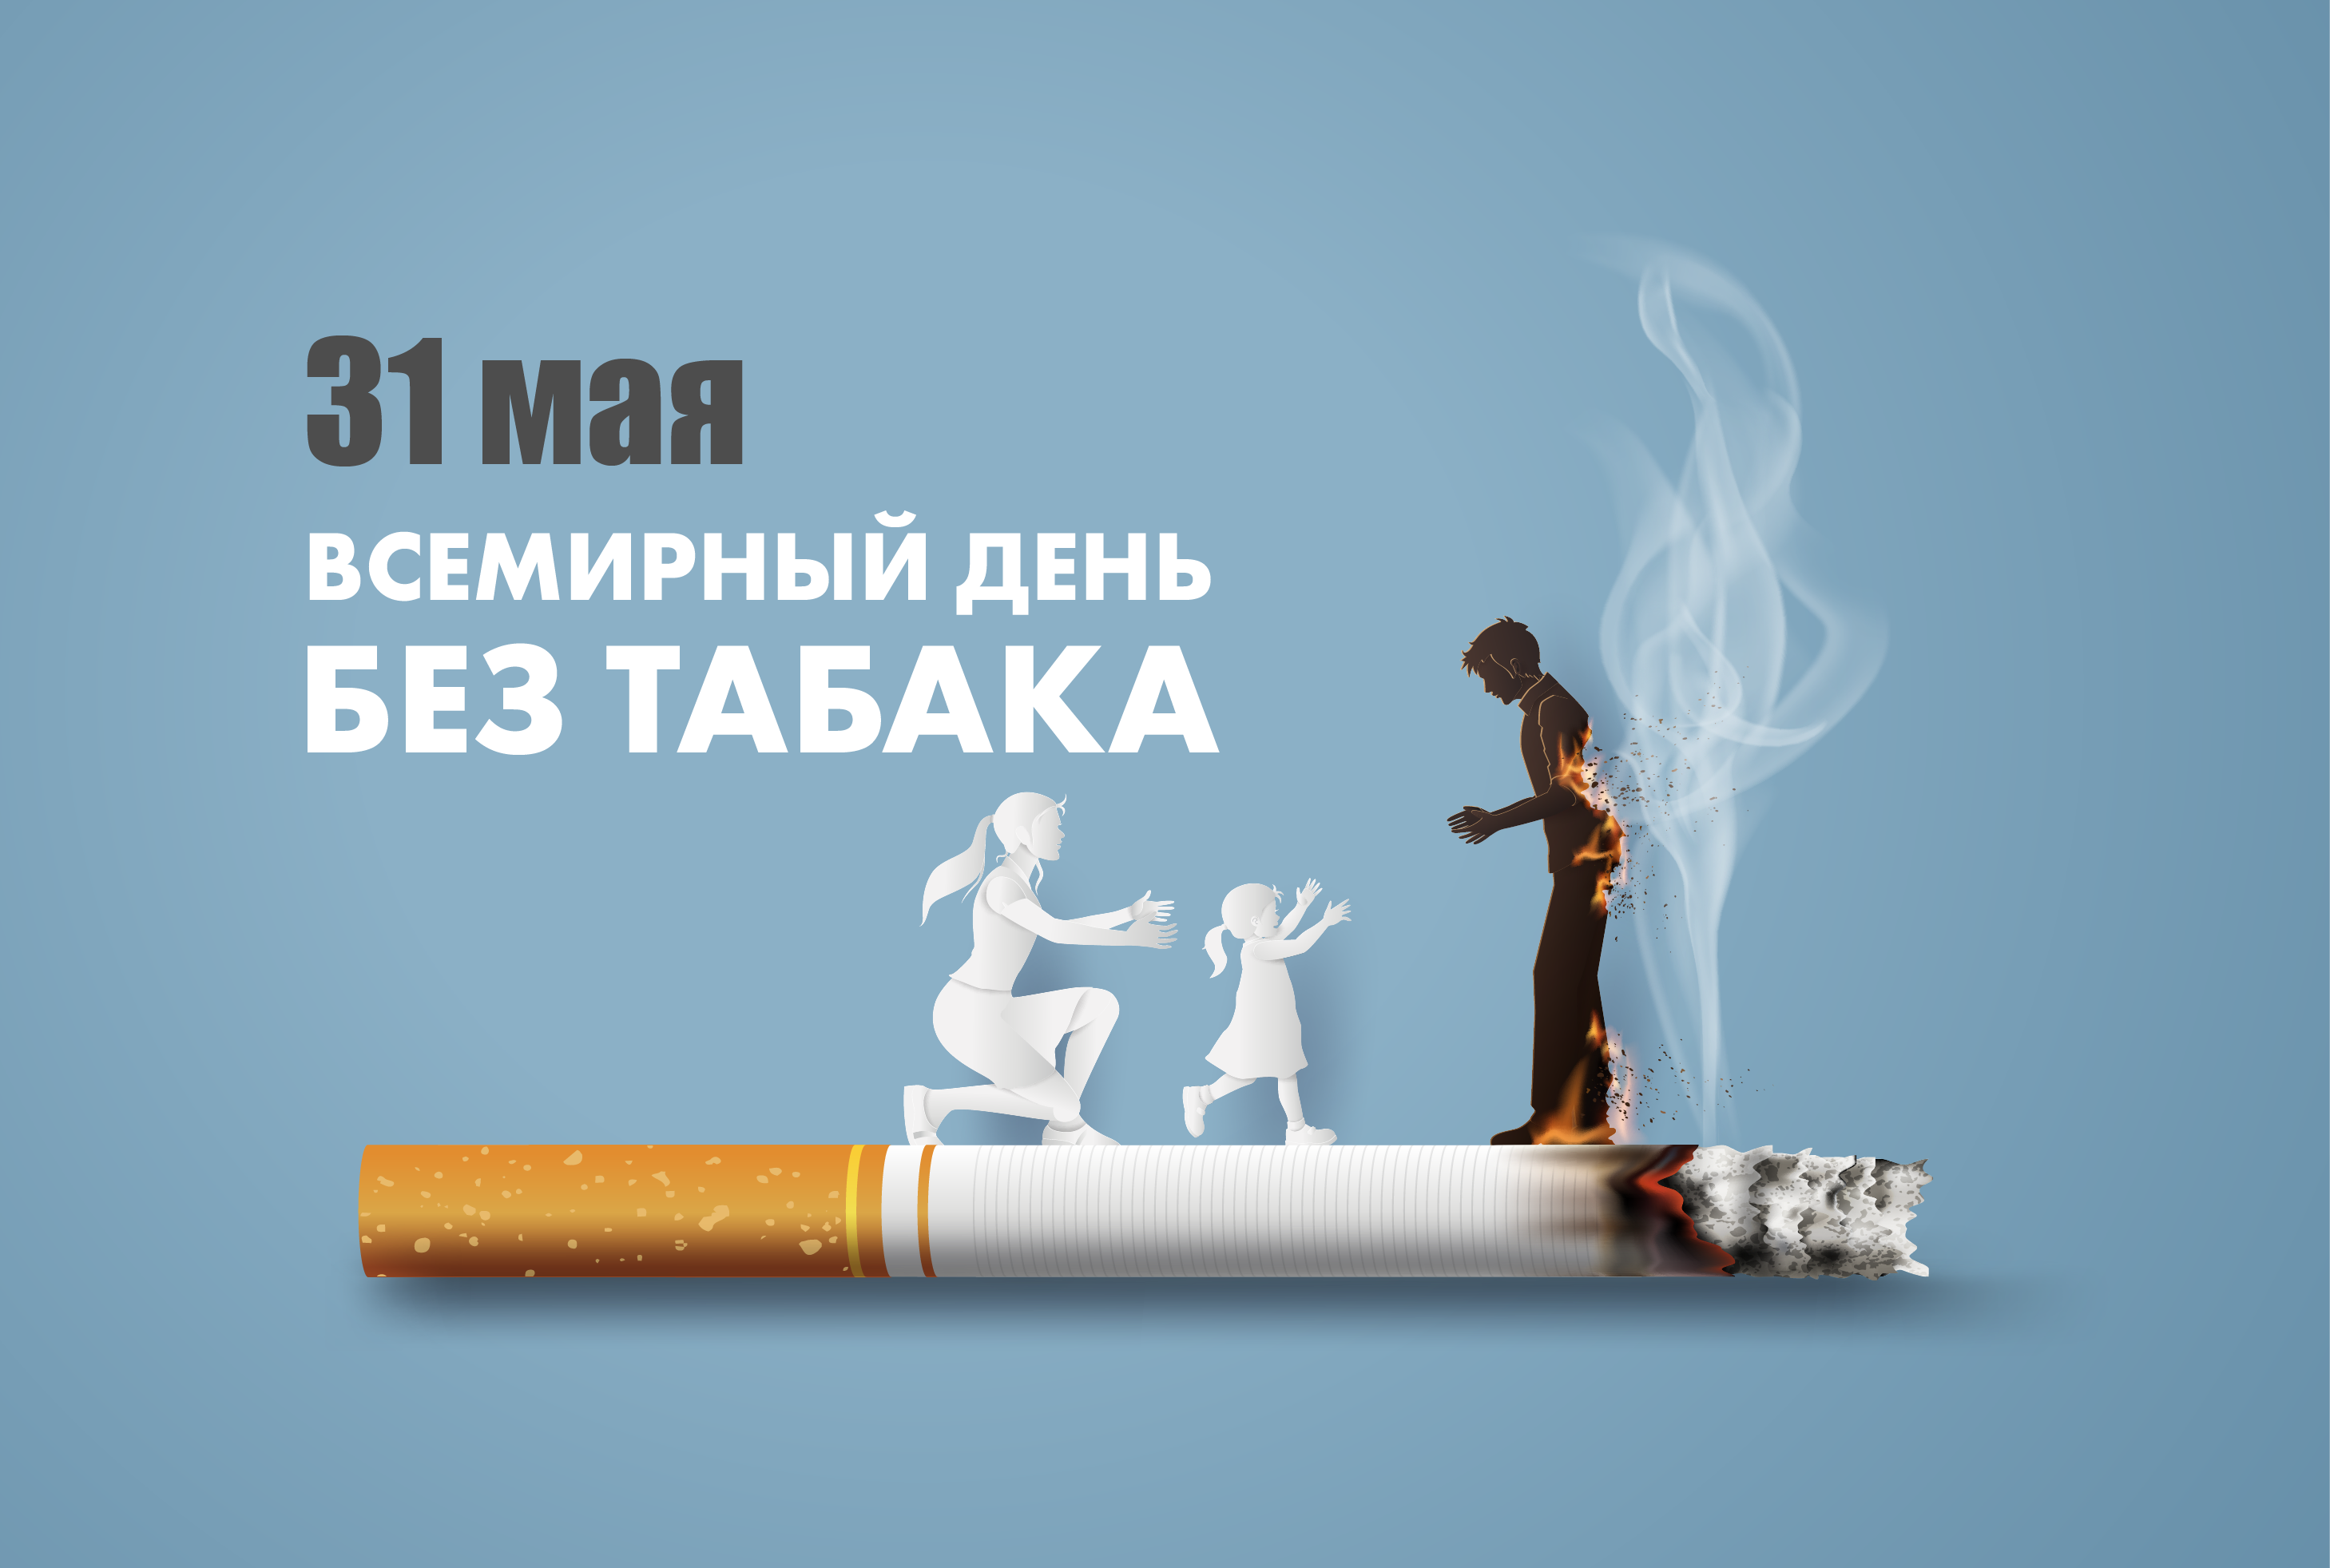 Табак и здоровье — несовместимы!